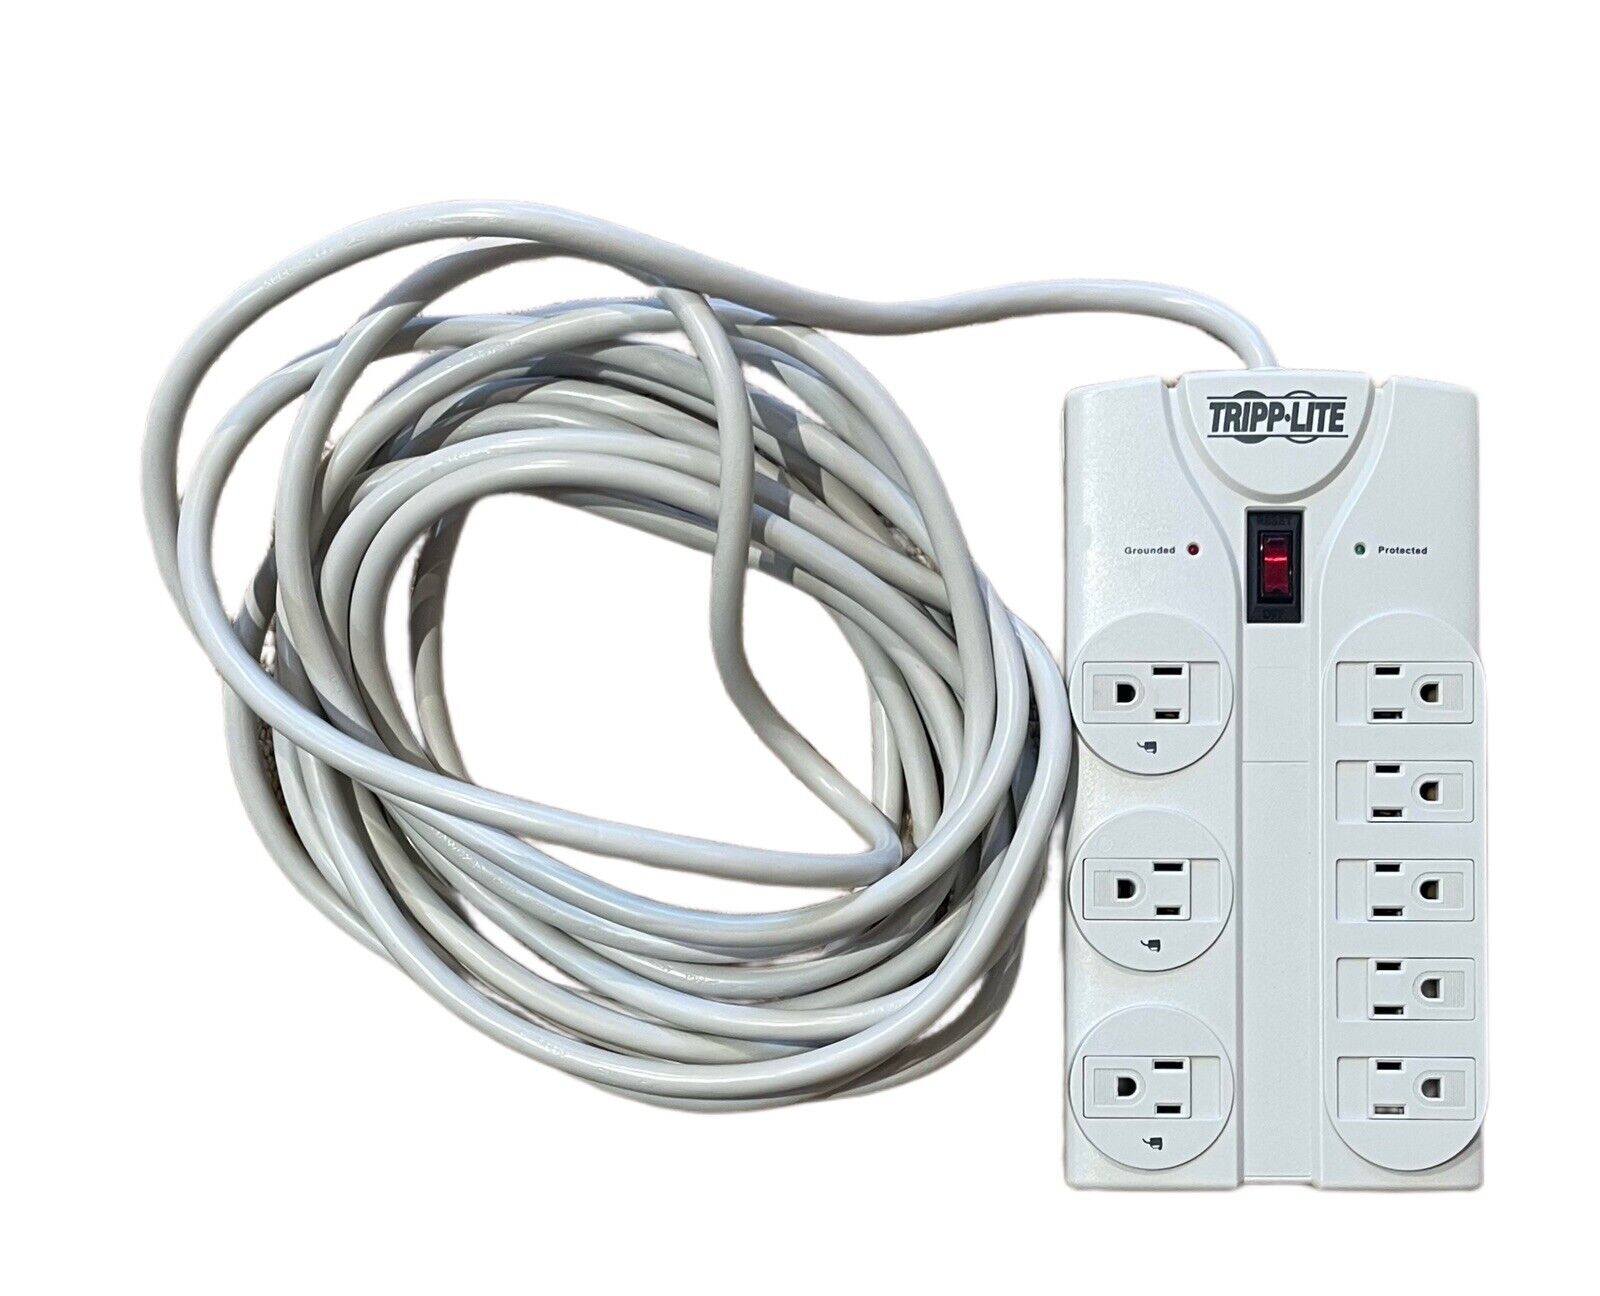 Tripp Lite 8 Plug Power Strip Outlet Extender, 25 Ft Extension Cord